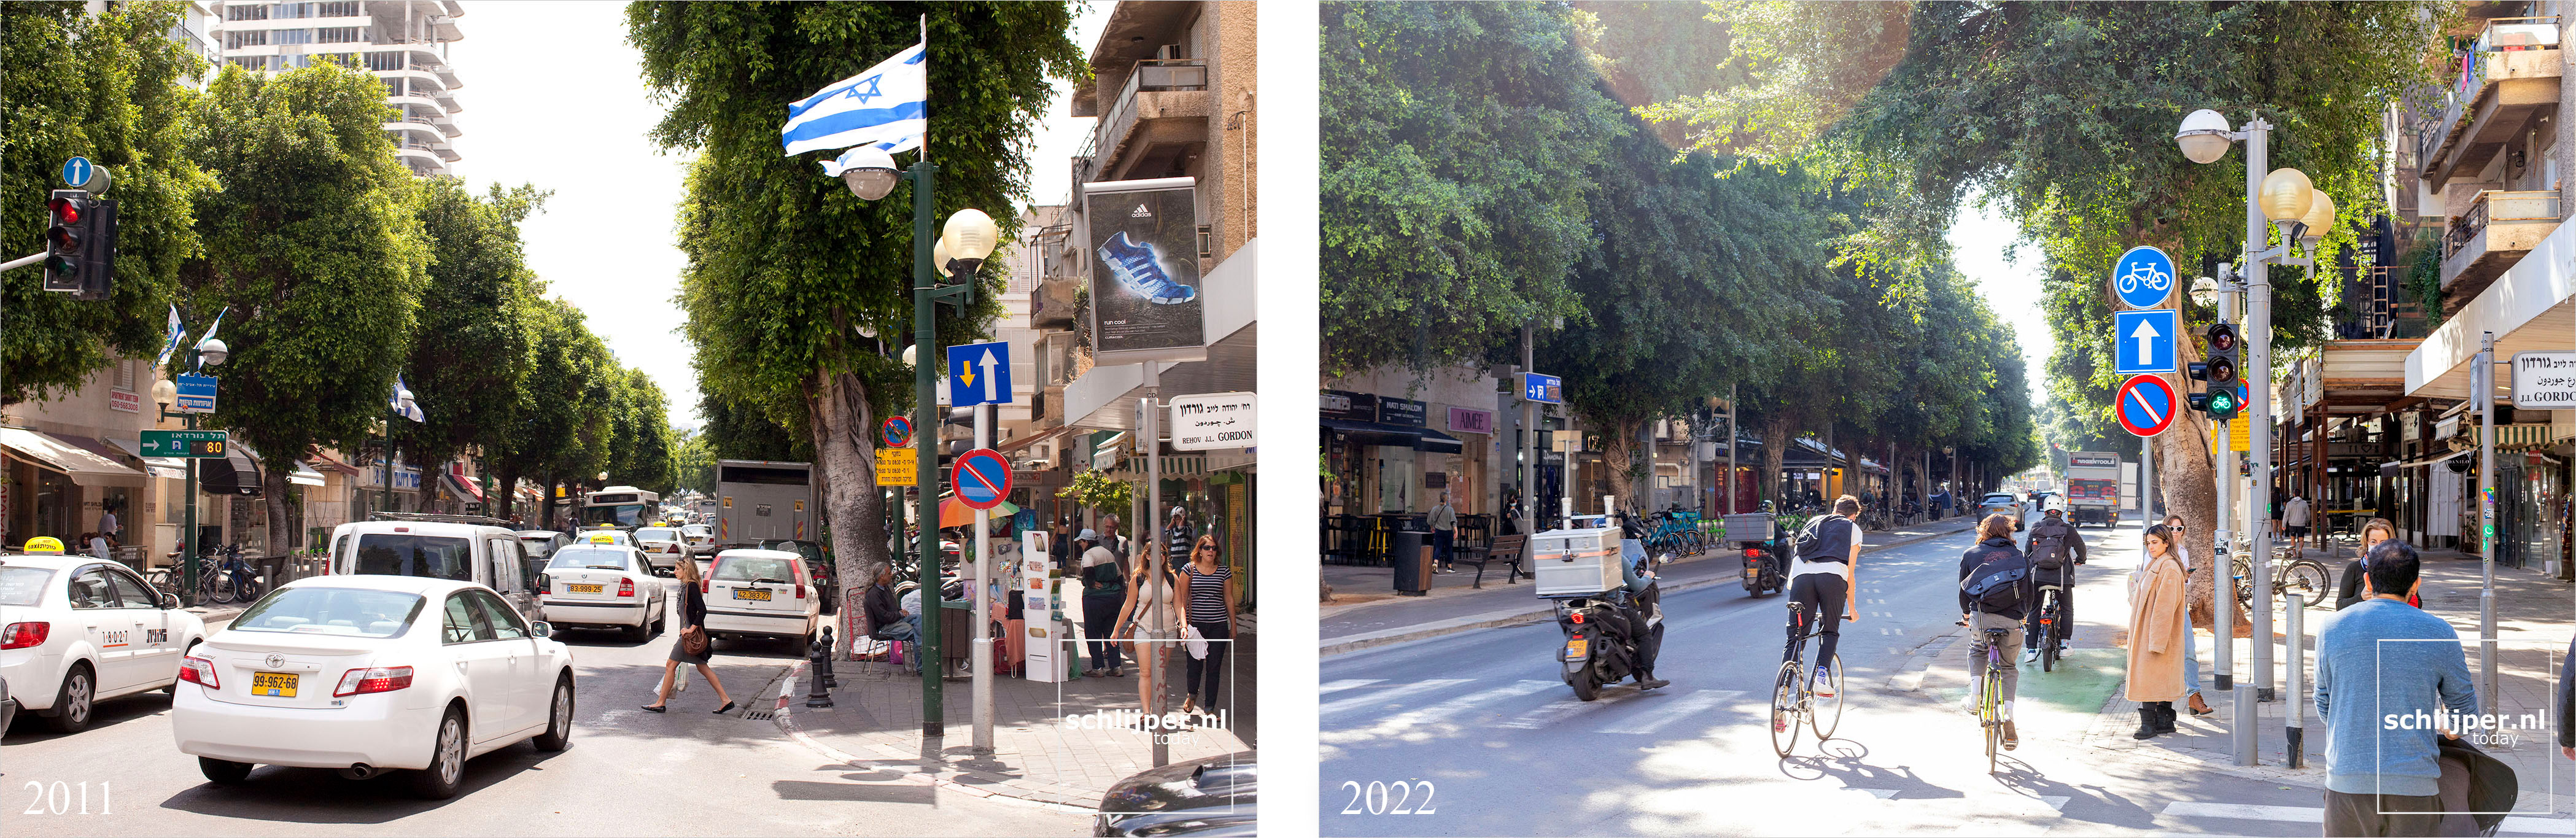 Israel, Tel Aviv, 9 januari 2022